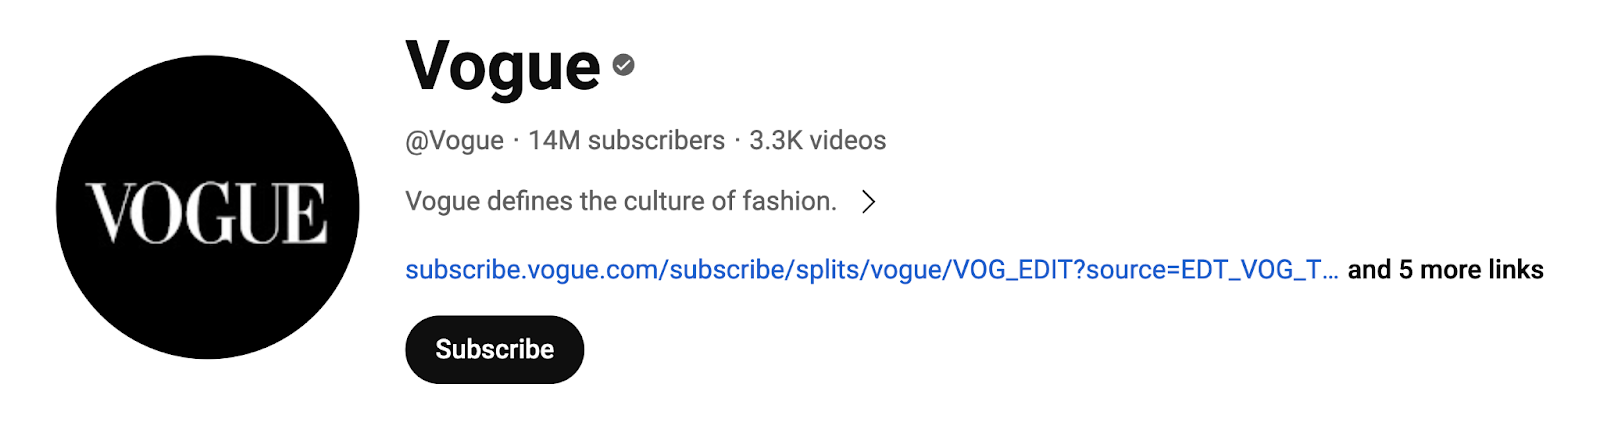 Fashion magazine Vogue's YouTube channel